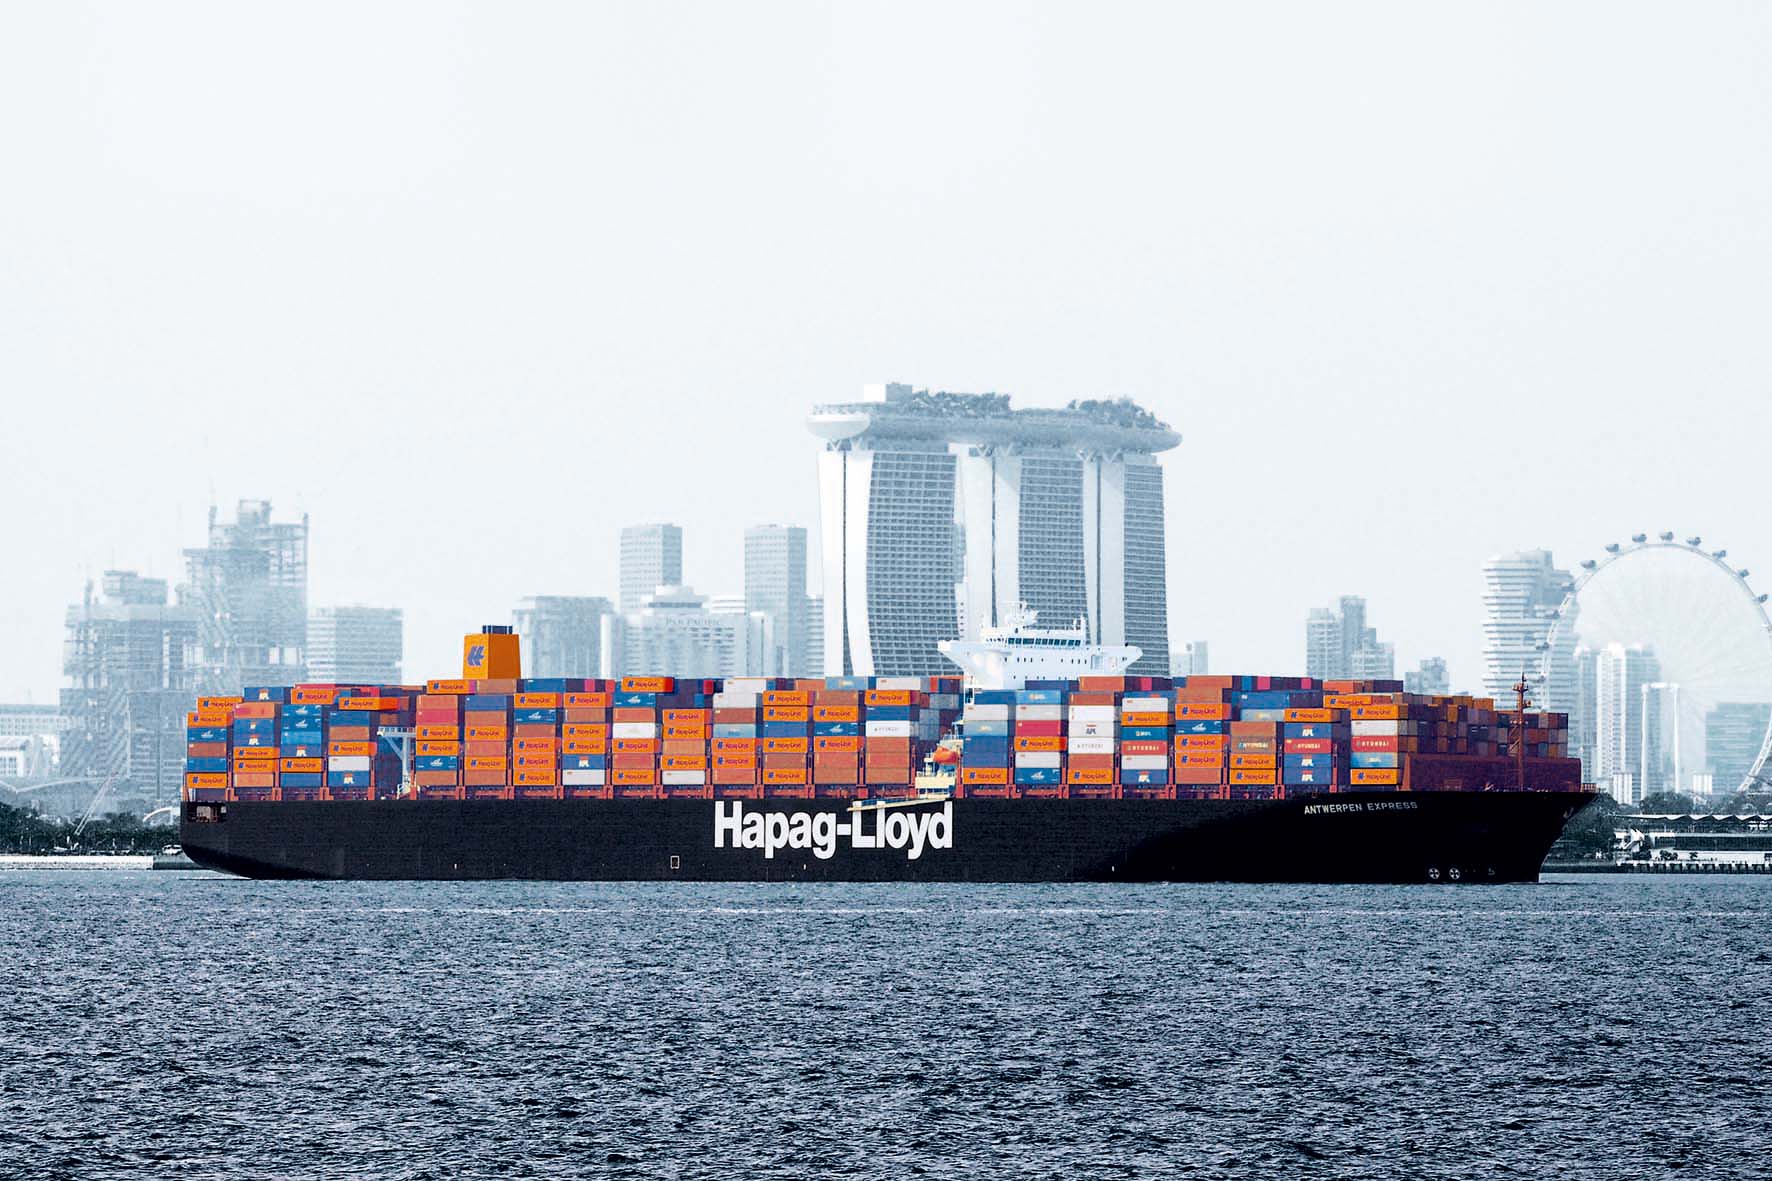 Hapag-Lloyd acquires Africa carrier NileDutch. Image: Hapag